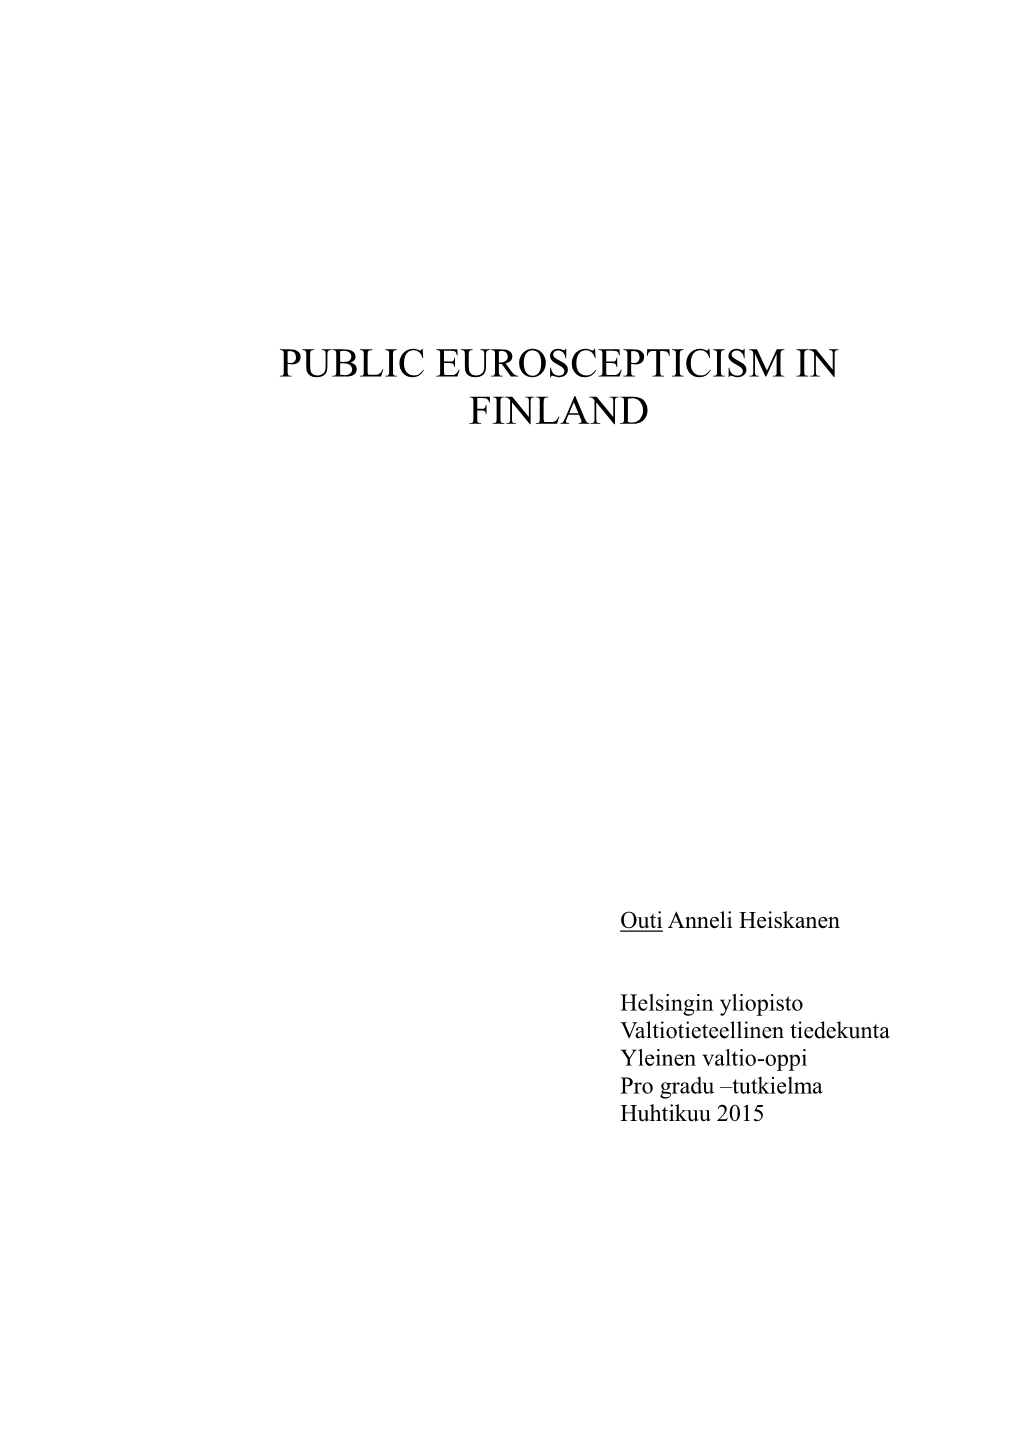 Public Euroscepticism in Finland